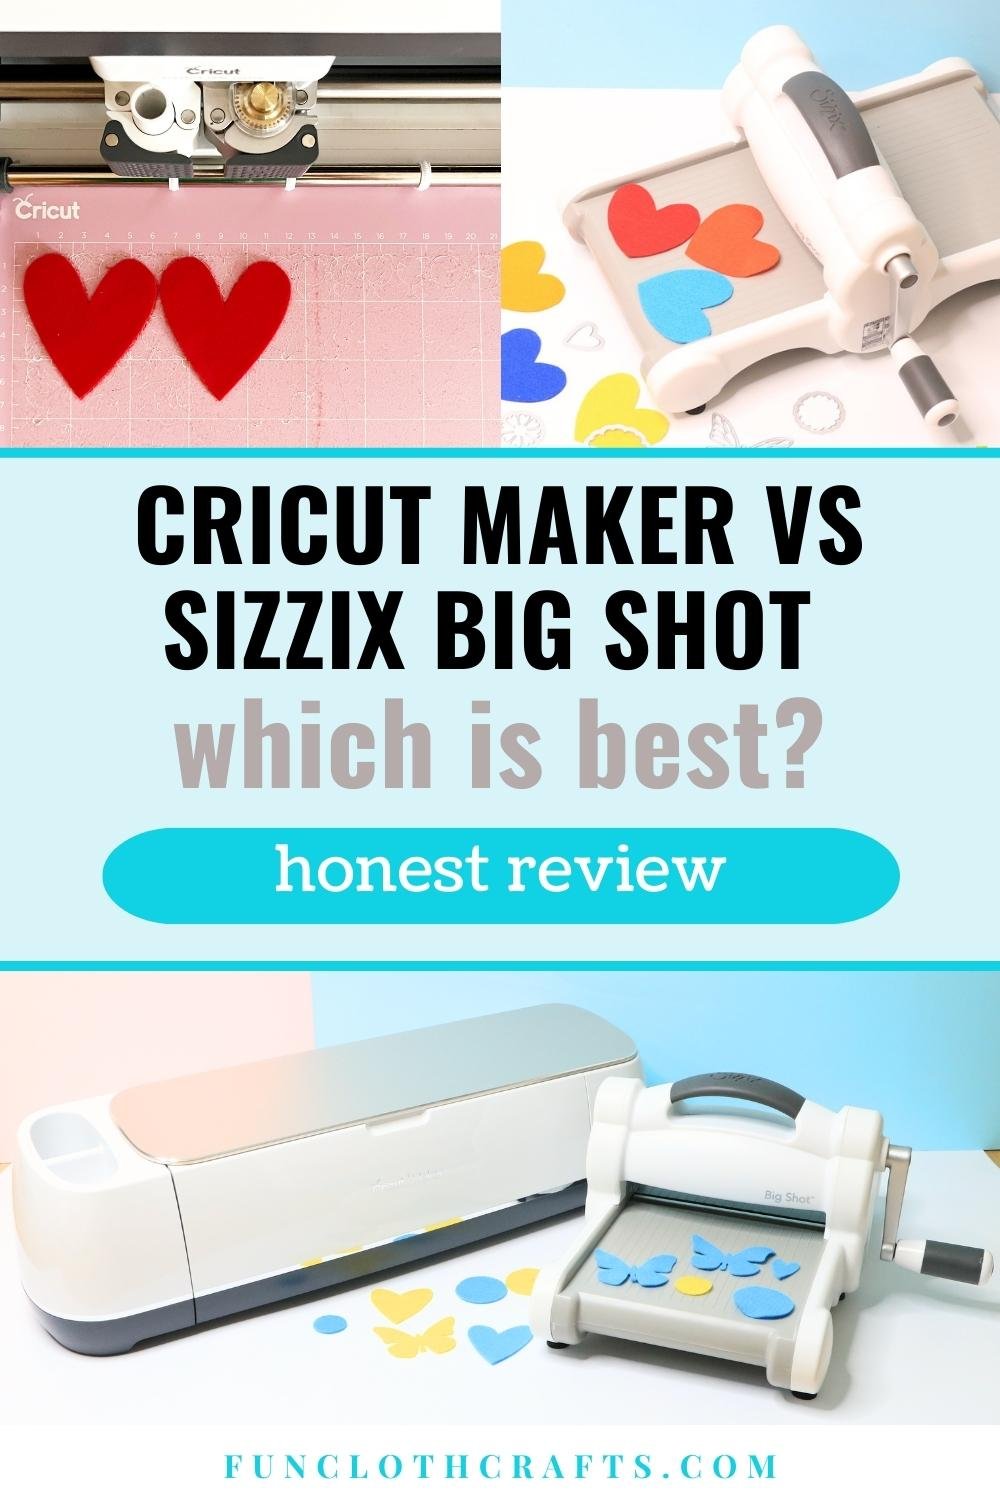 Sizzix Big Shot Plus Machine Design Ideas - Personalization